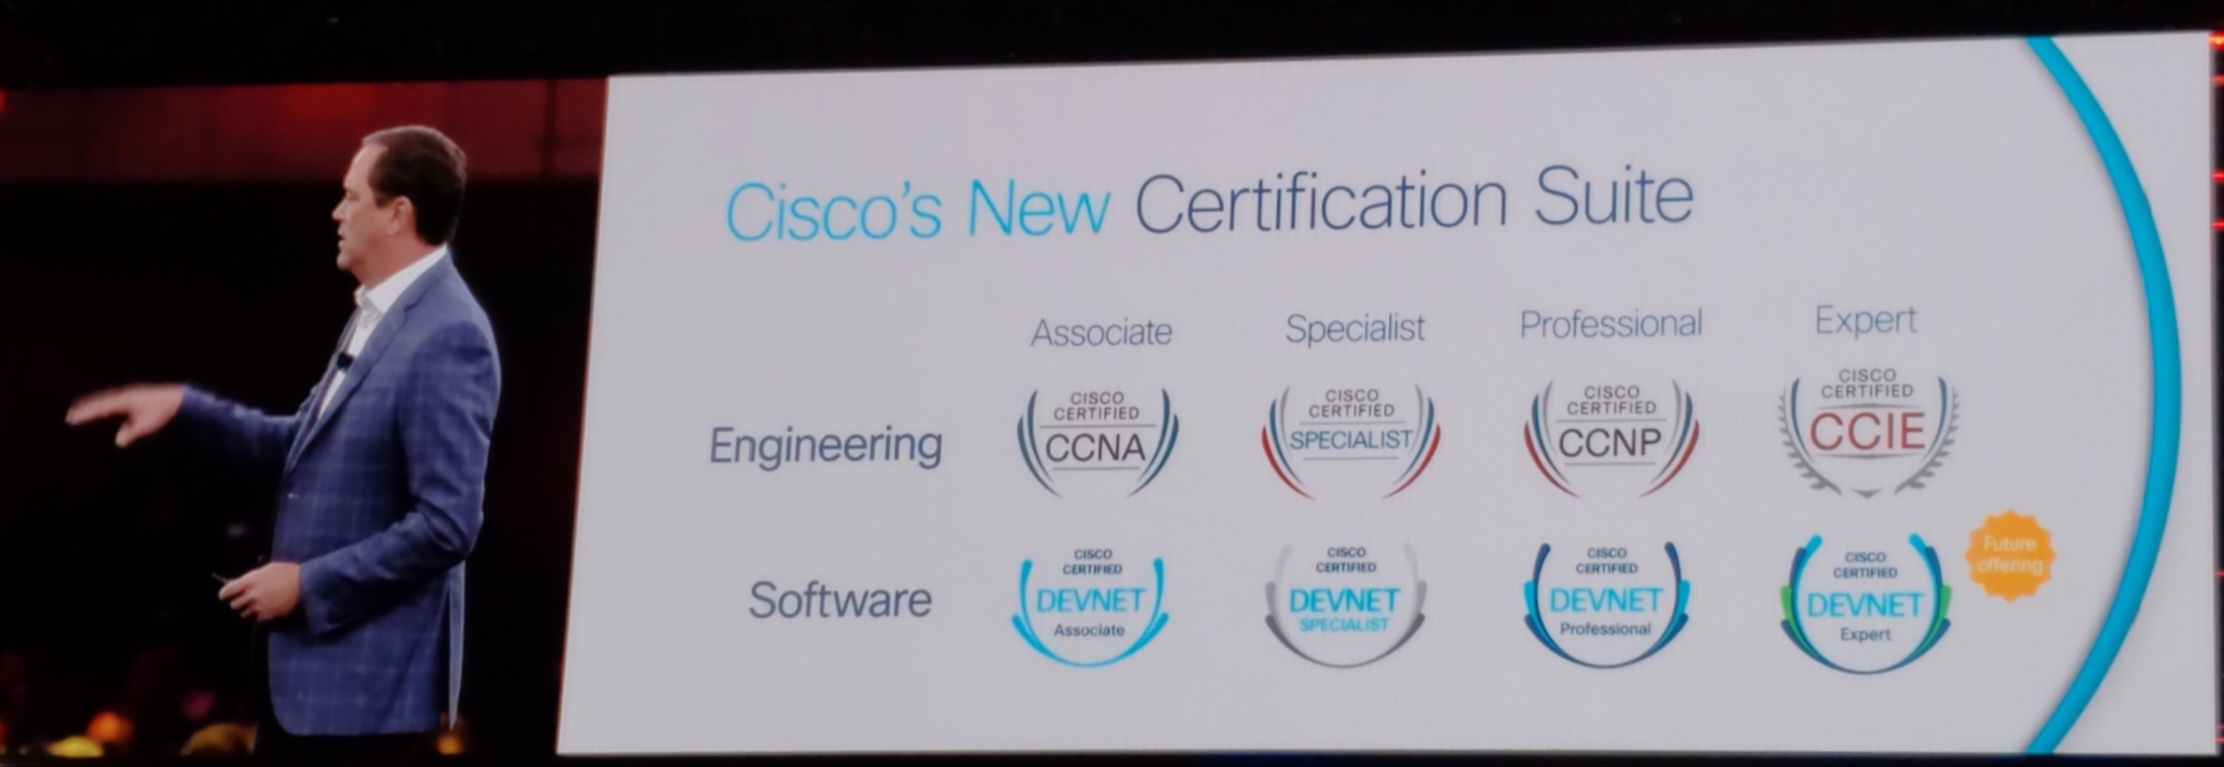 Cisco CEO Chuck Robbins presenting on the new Cisco Certification program at Cisco Live 2019.